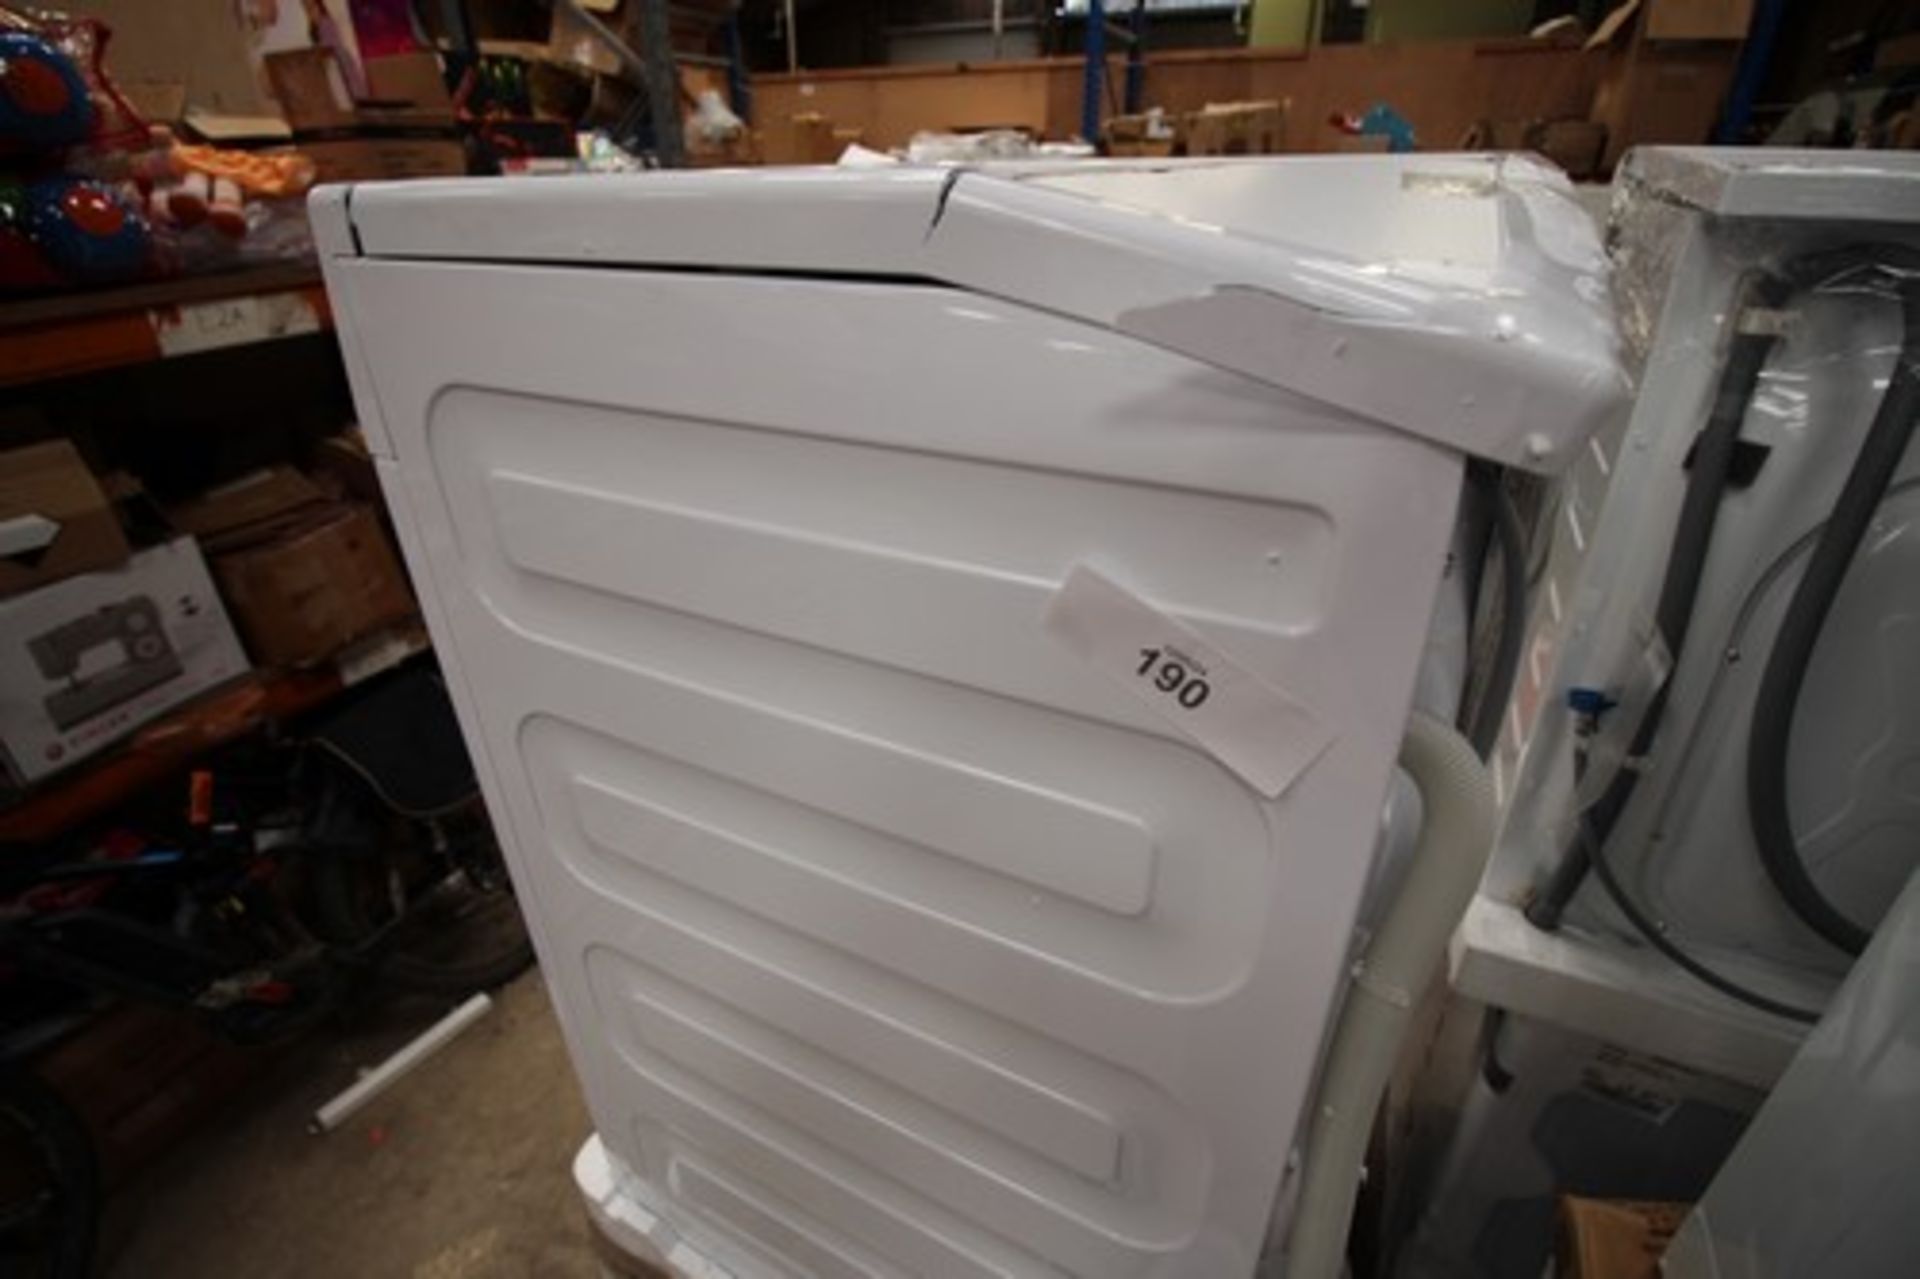 1 x Beko 8kg washing machine, Model WTL84141W, broken top panel, dented back top right corner - - Image 2 of 4